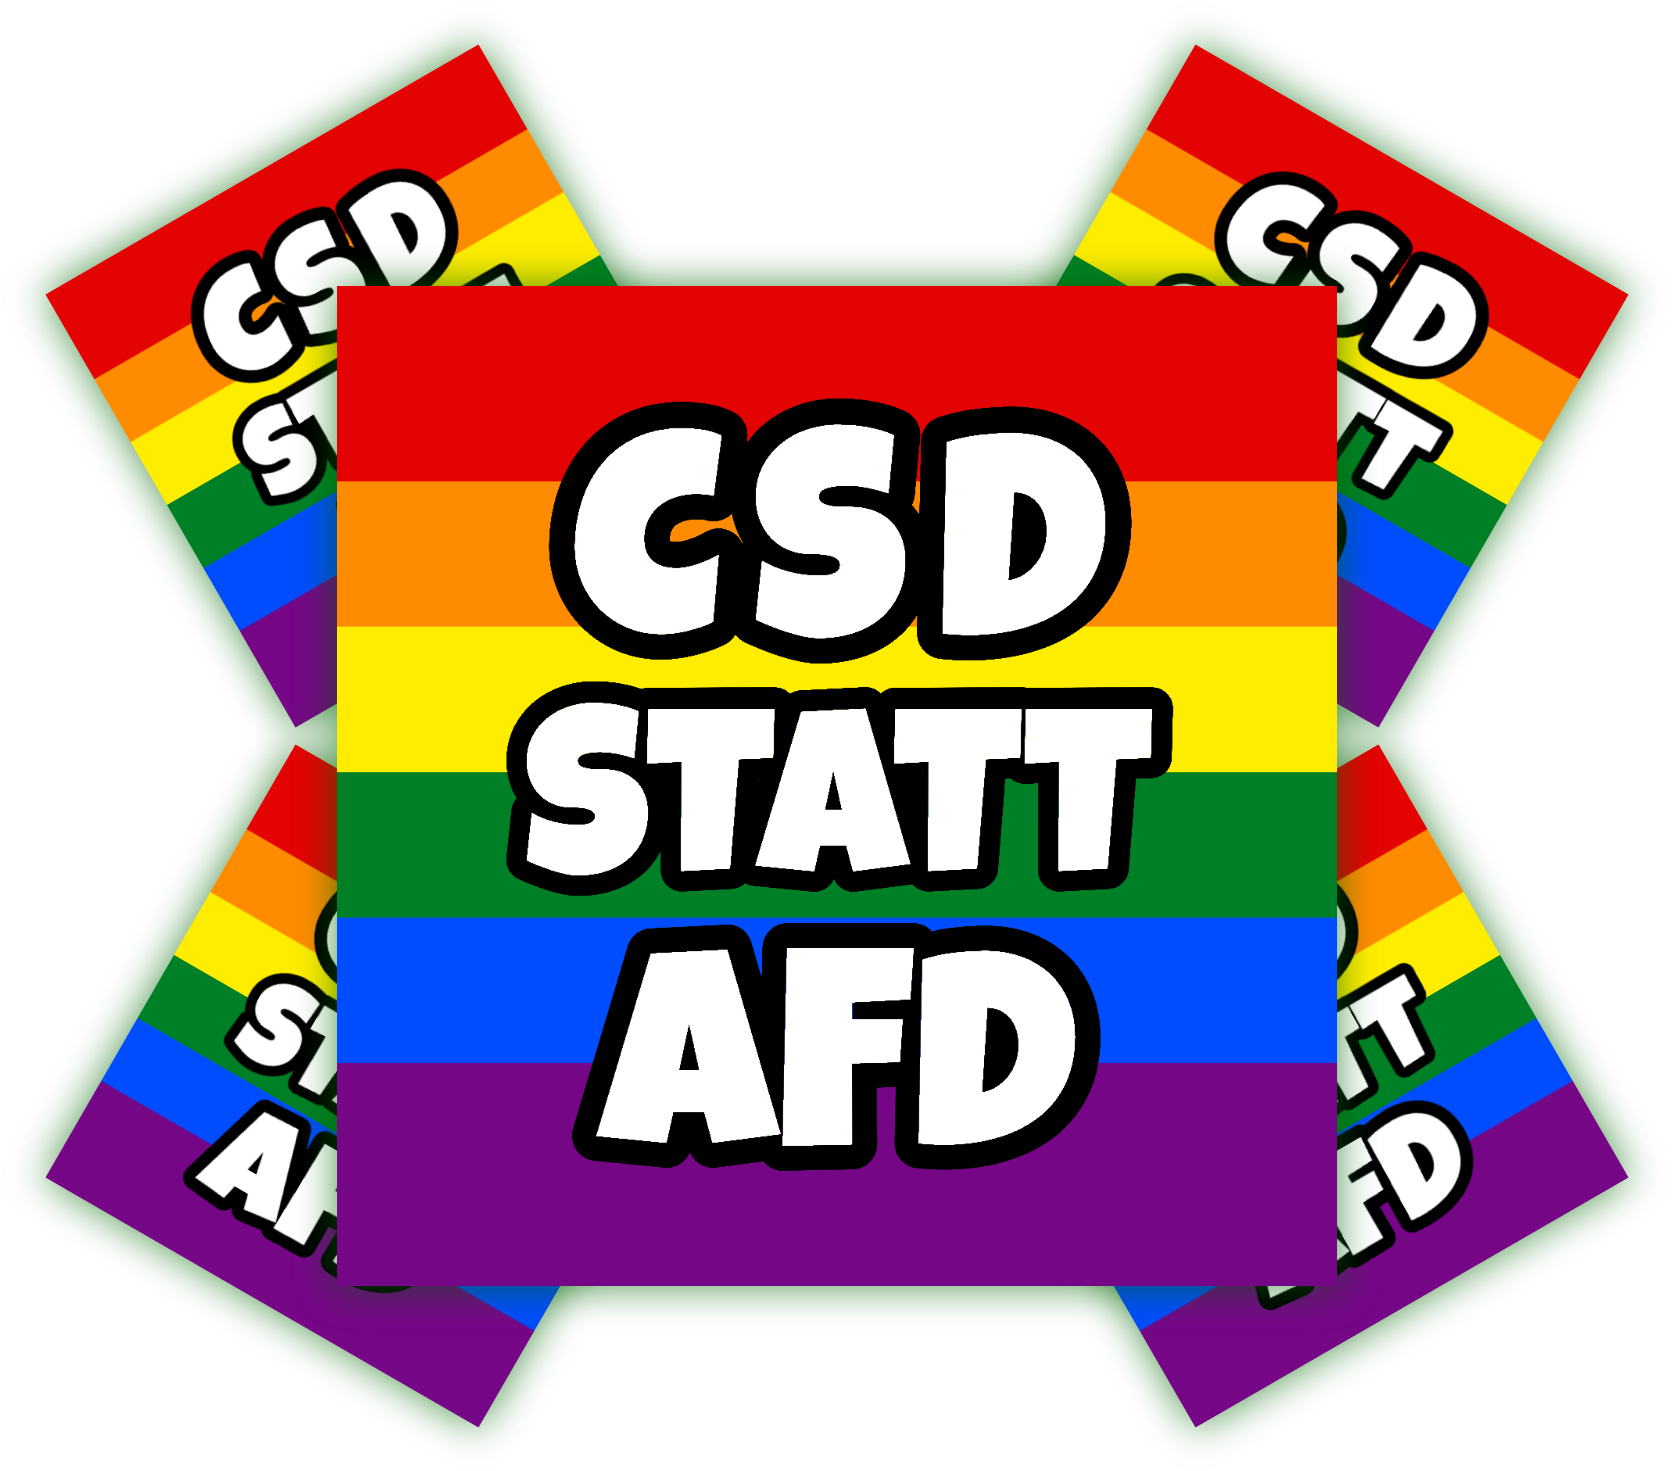 CSD statt AFD | Aufkleber